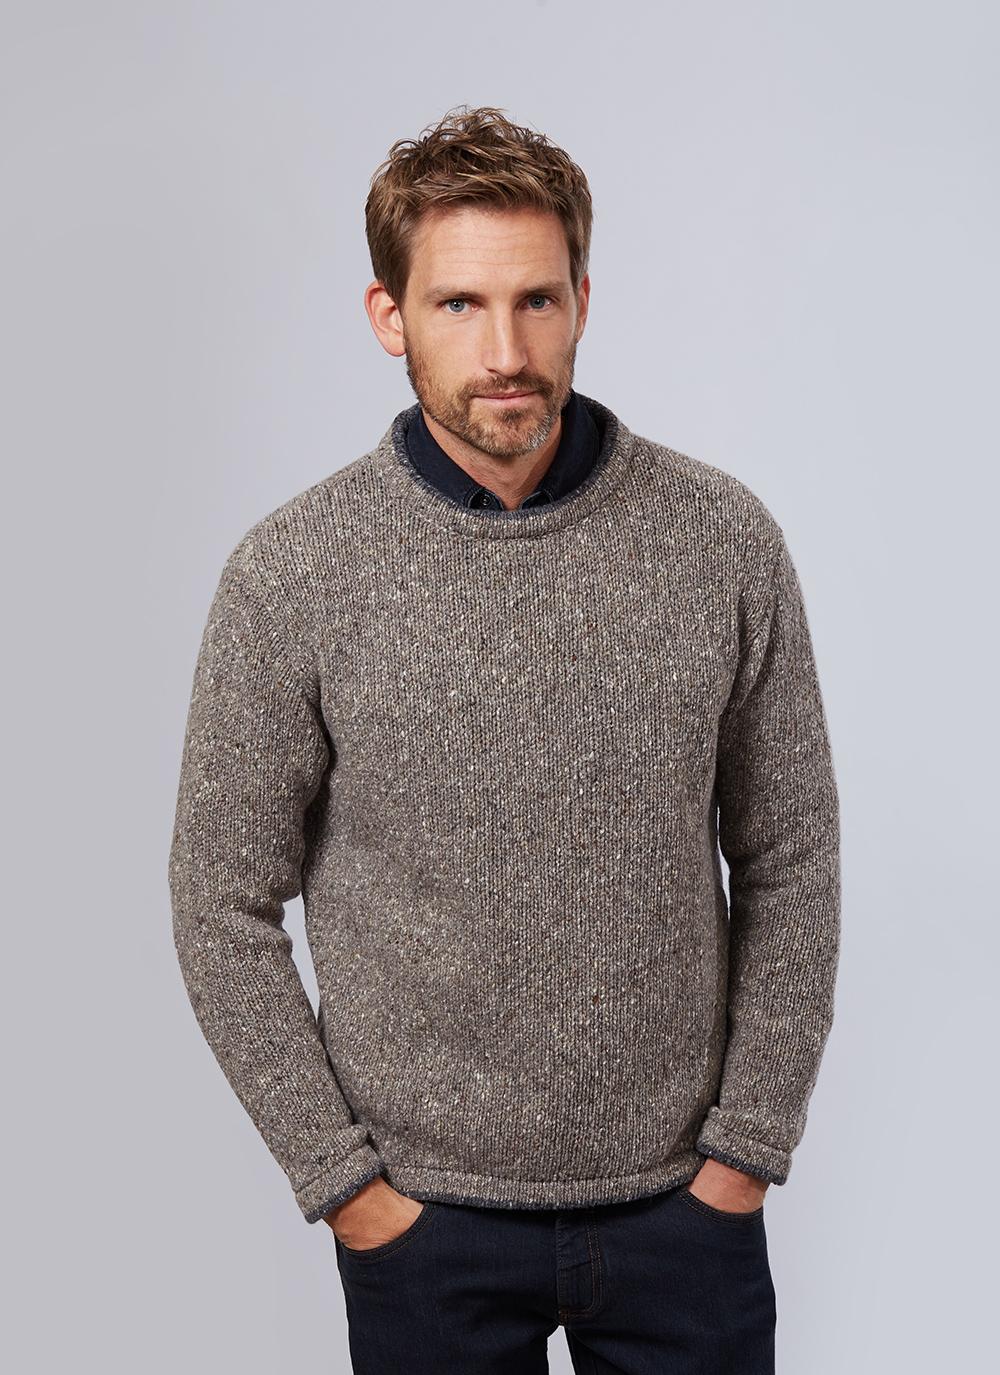 Wool Cashmere Roundstone Sweater | Blarney